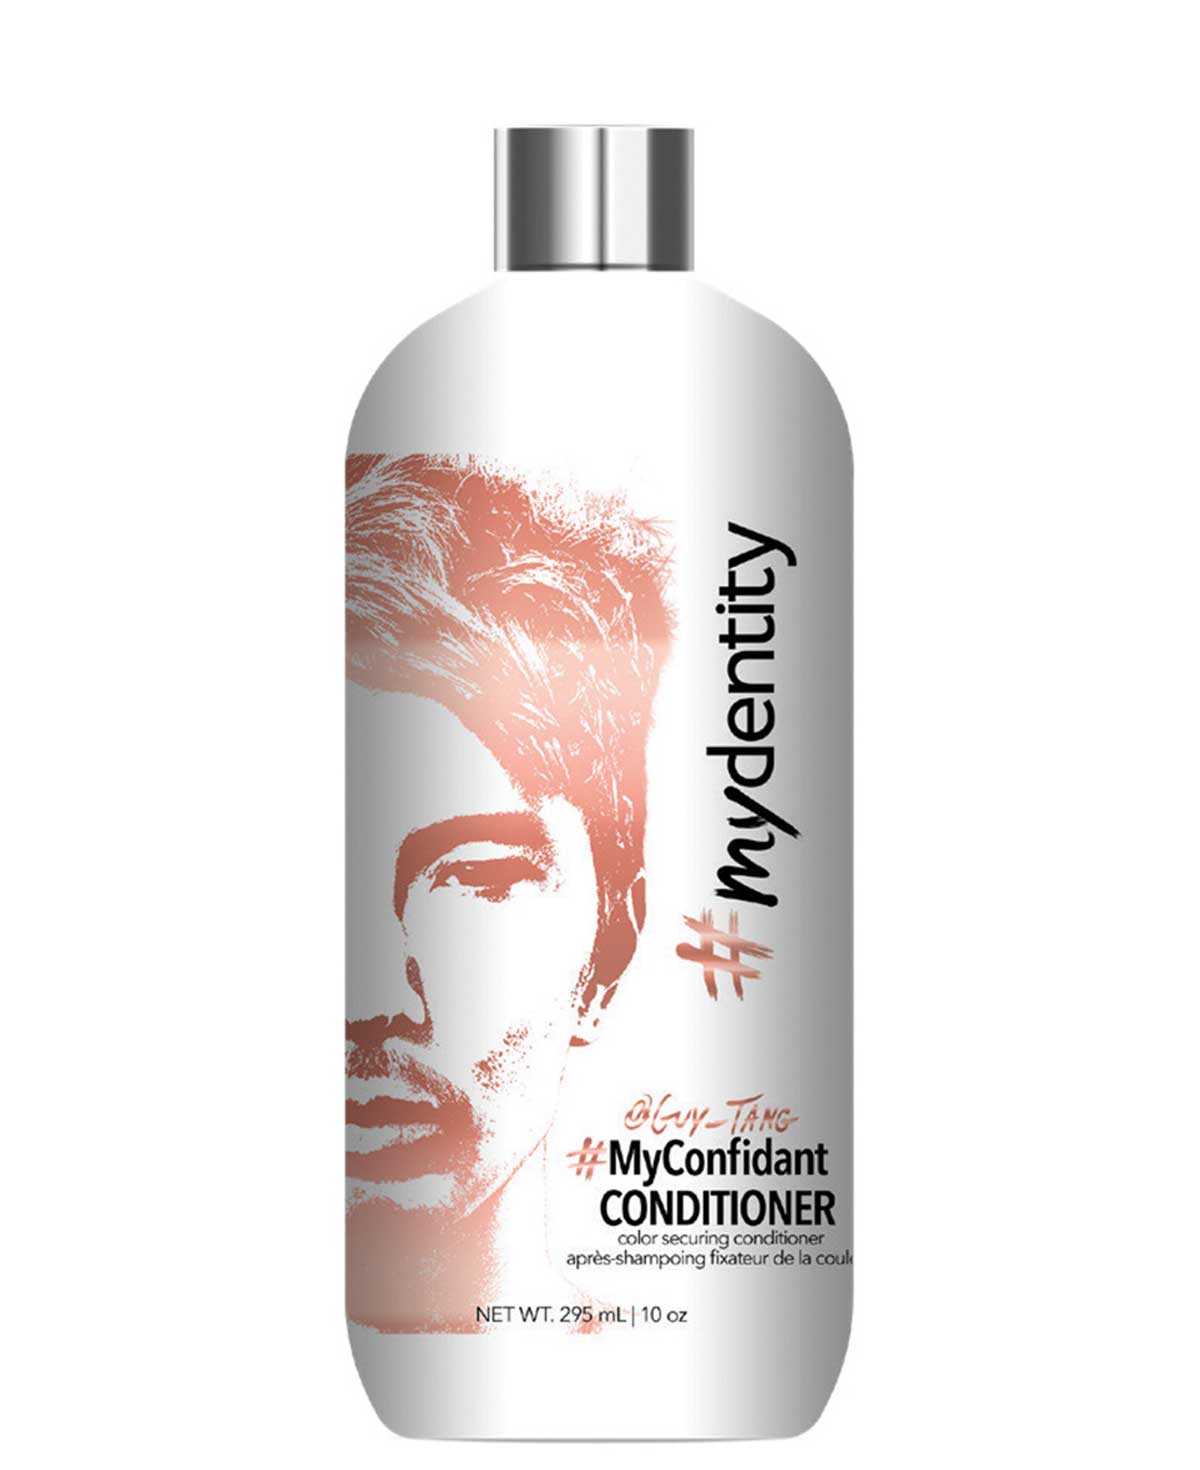 Mydentity - MyConfidant Conditioner 300ml